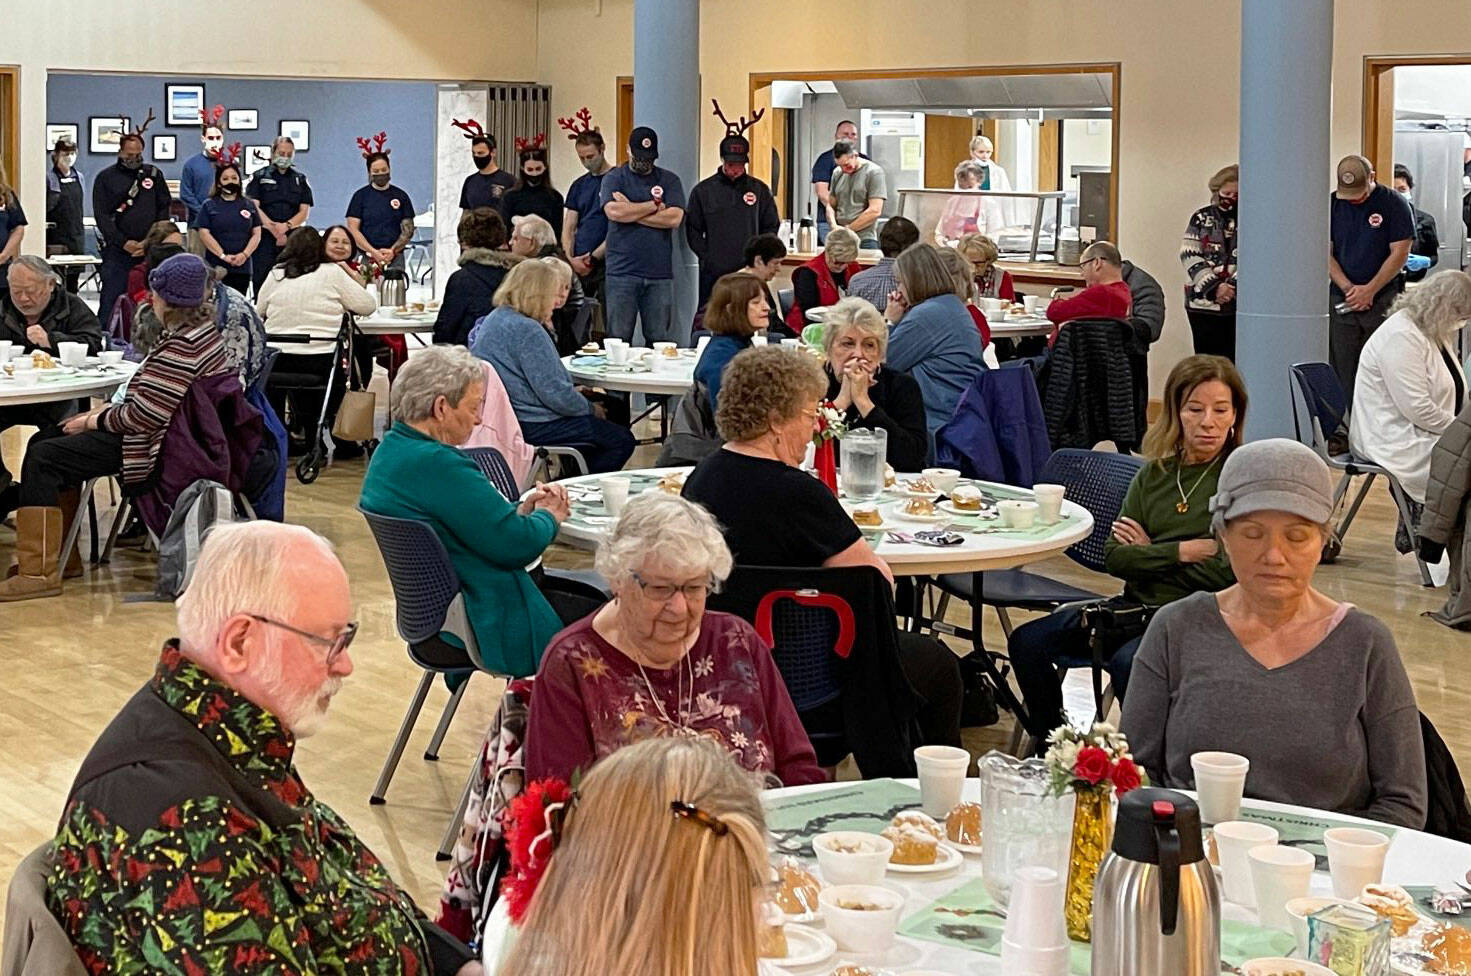 Puget Sound Fire serves up holiday luncheon at Kent Senior Center